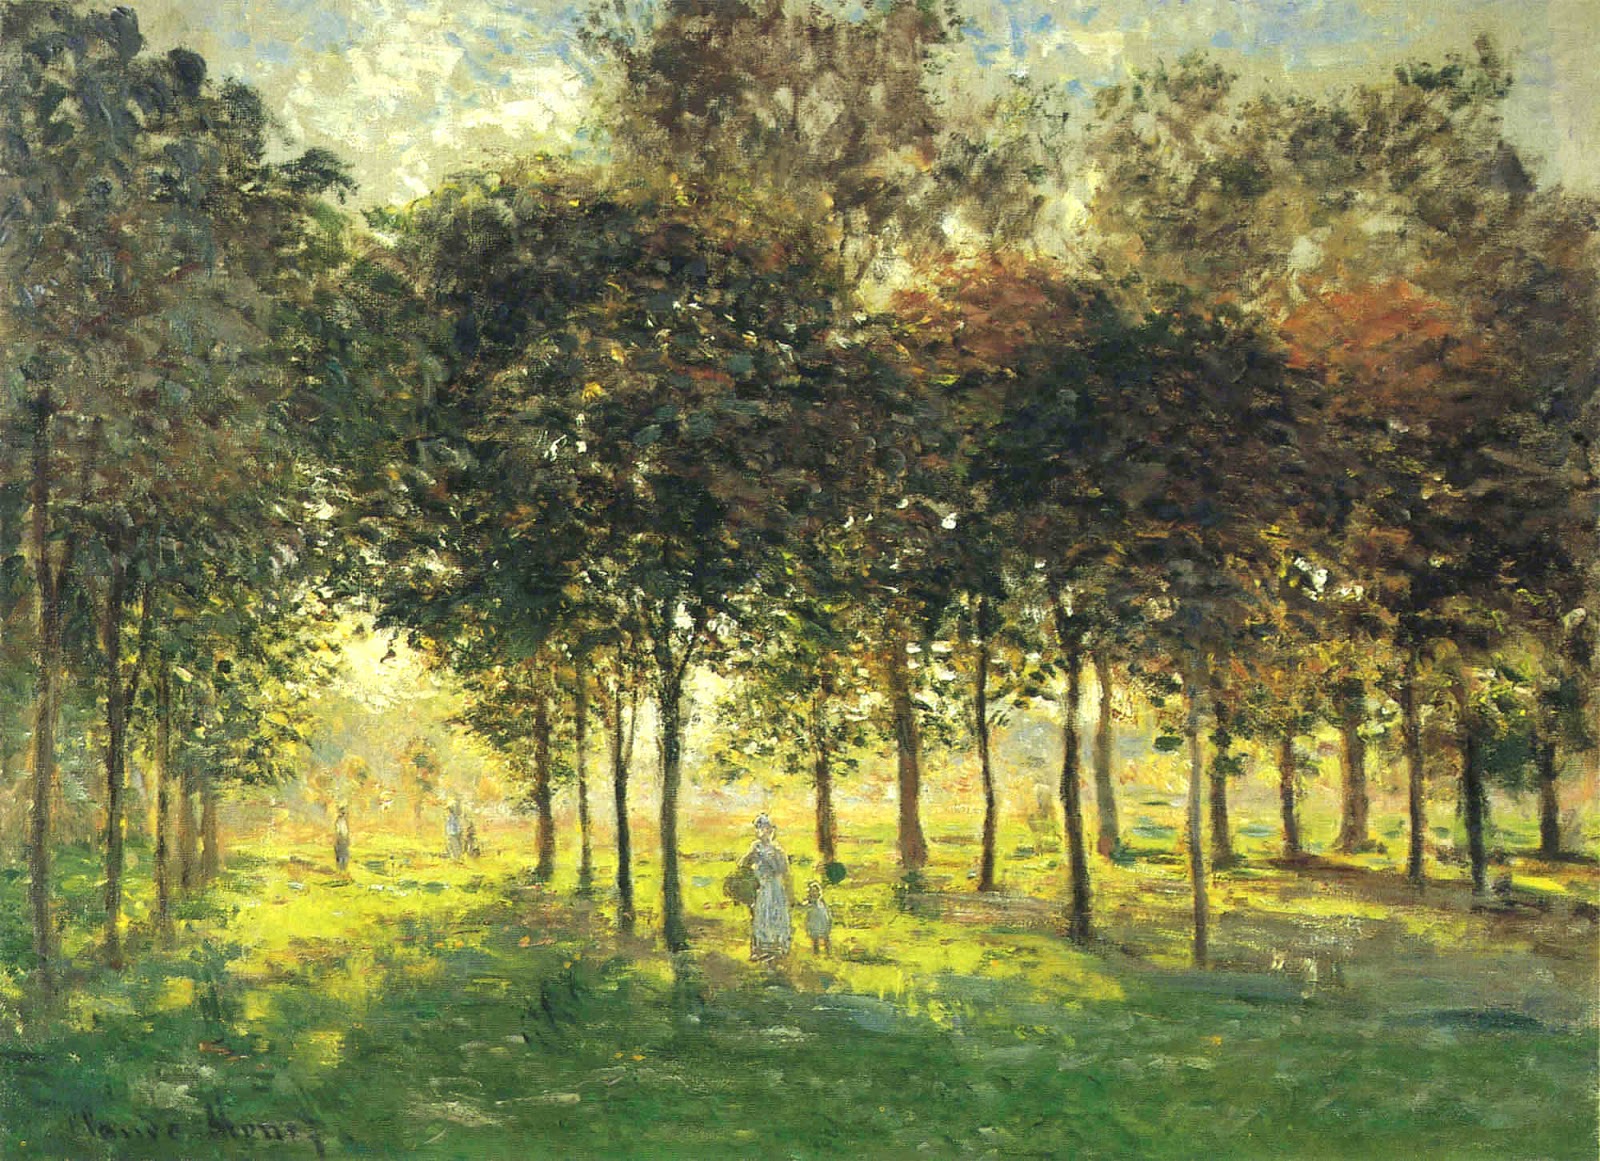 Claude+Monet-1840-1926 (793).jpg